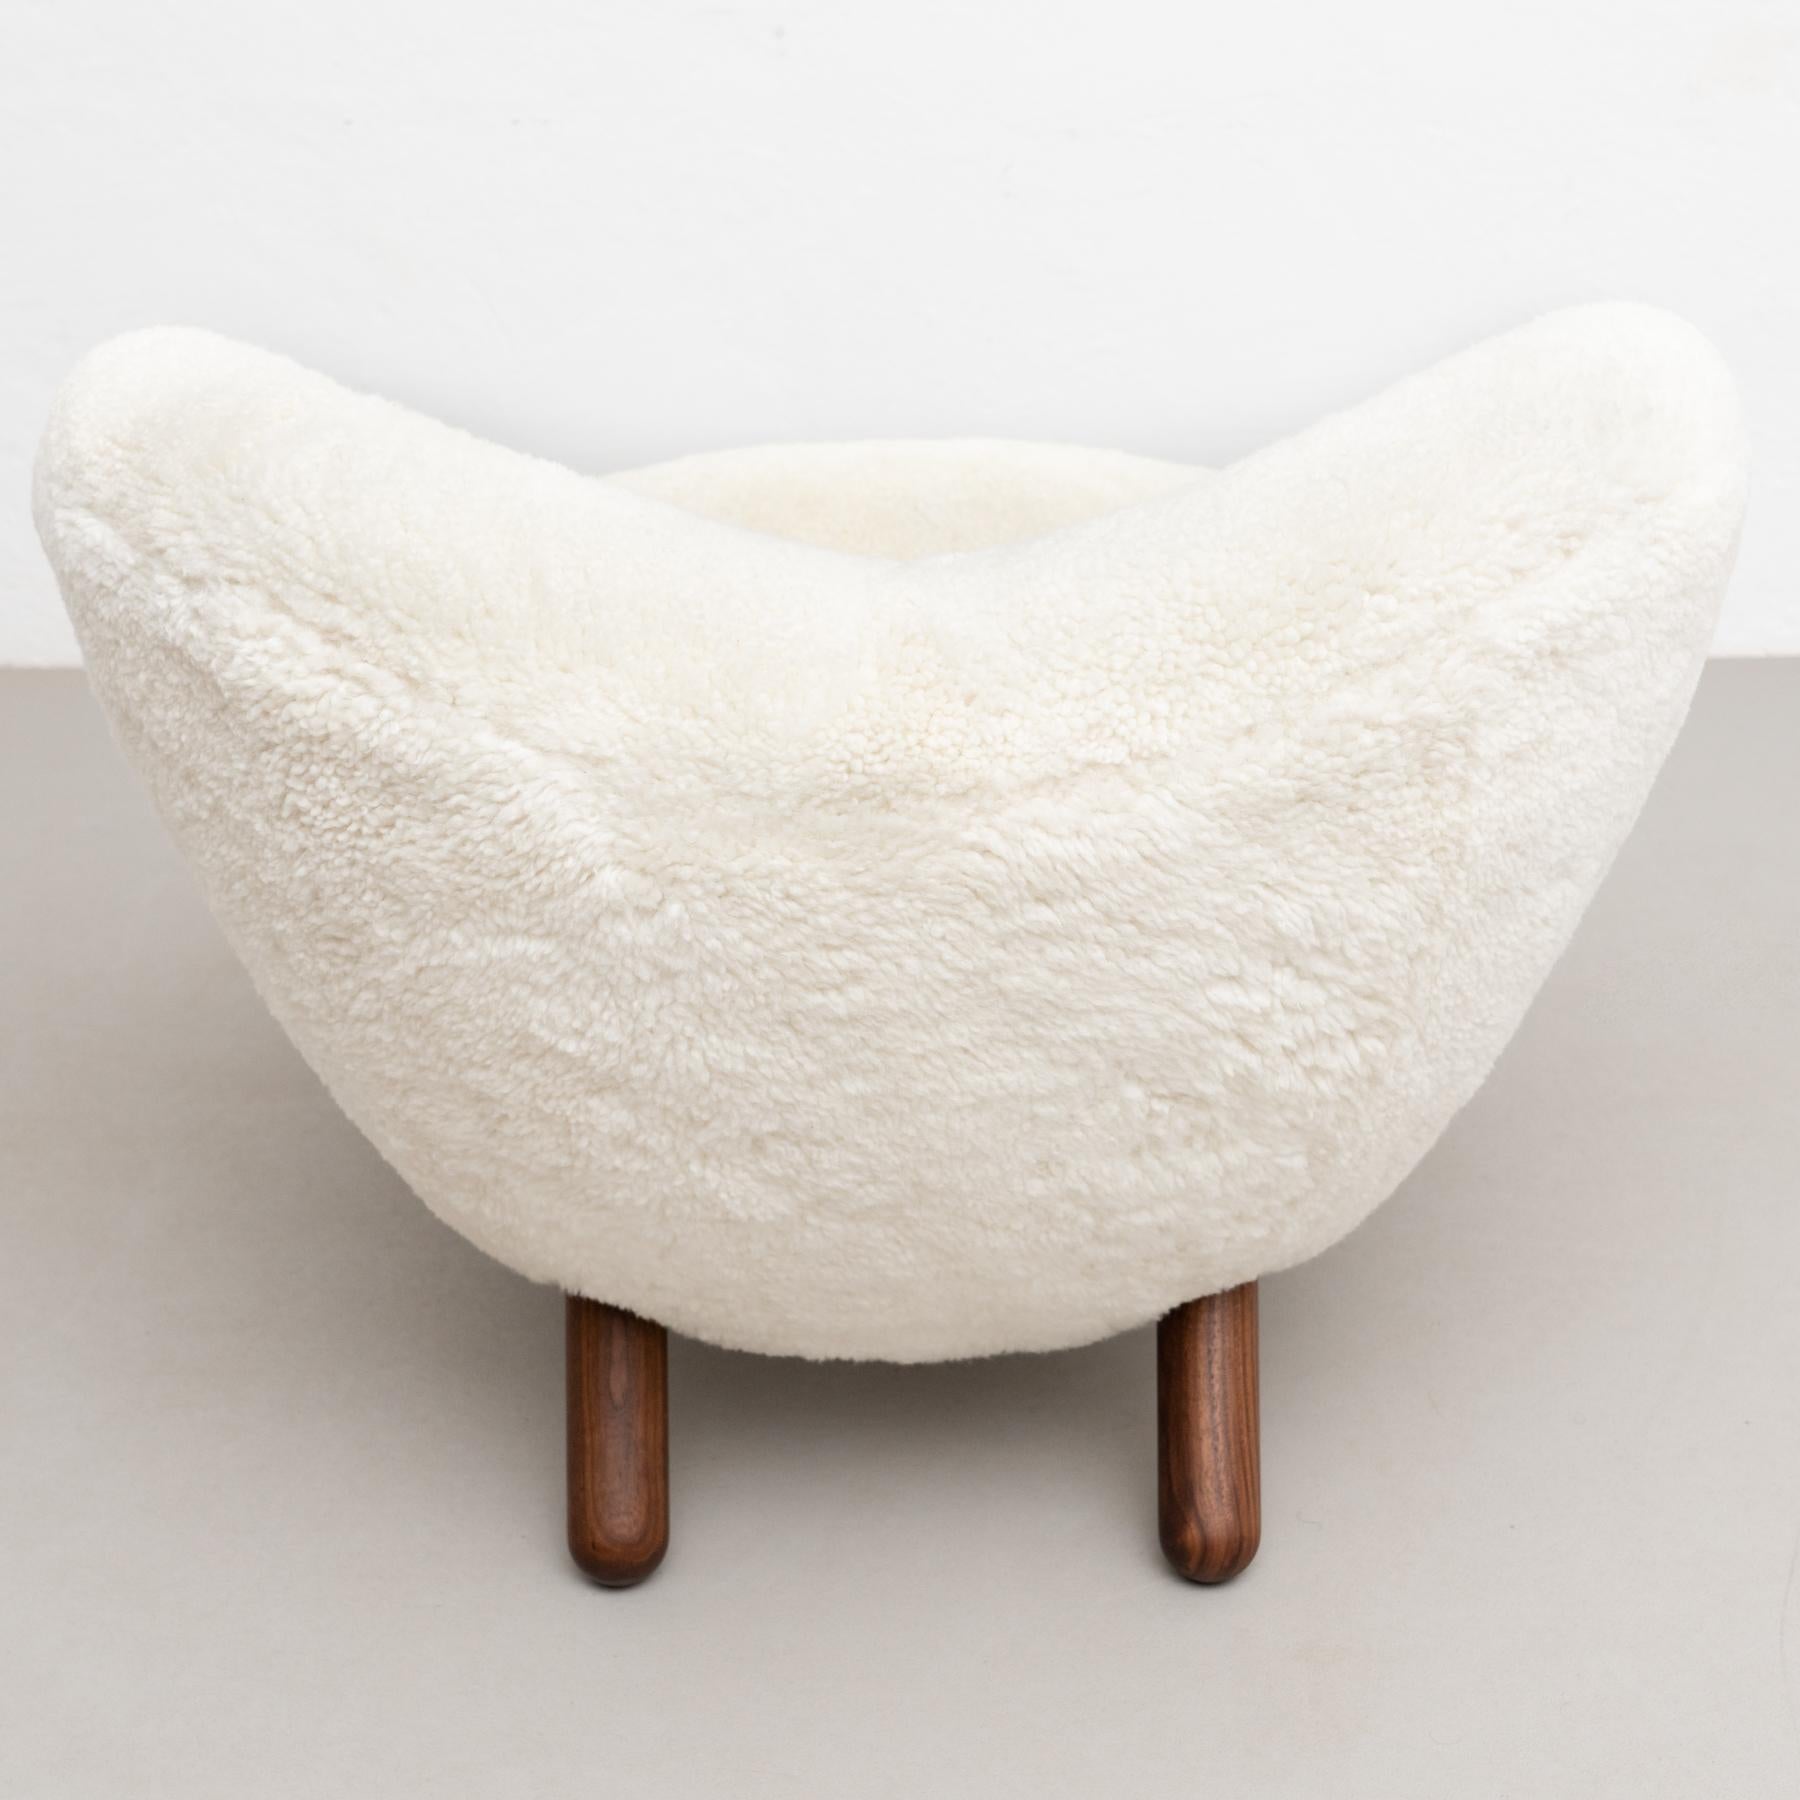 Contemporary Finn Juhl Pelican Chair Upholstered in Offwhite Sheepskin For Sale